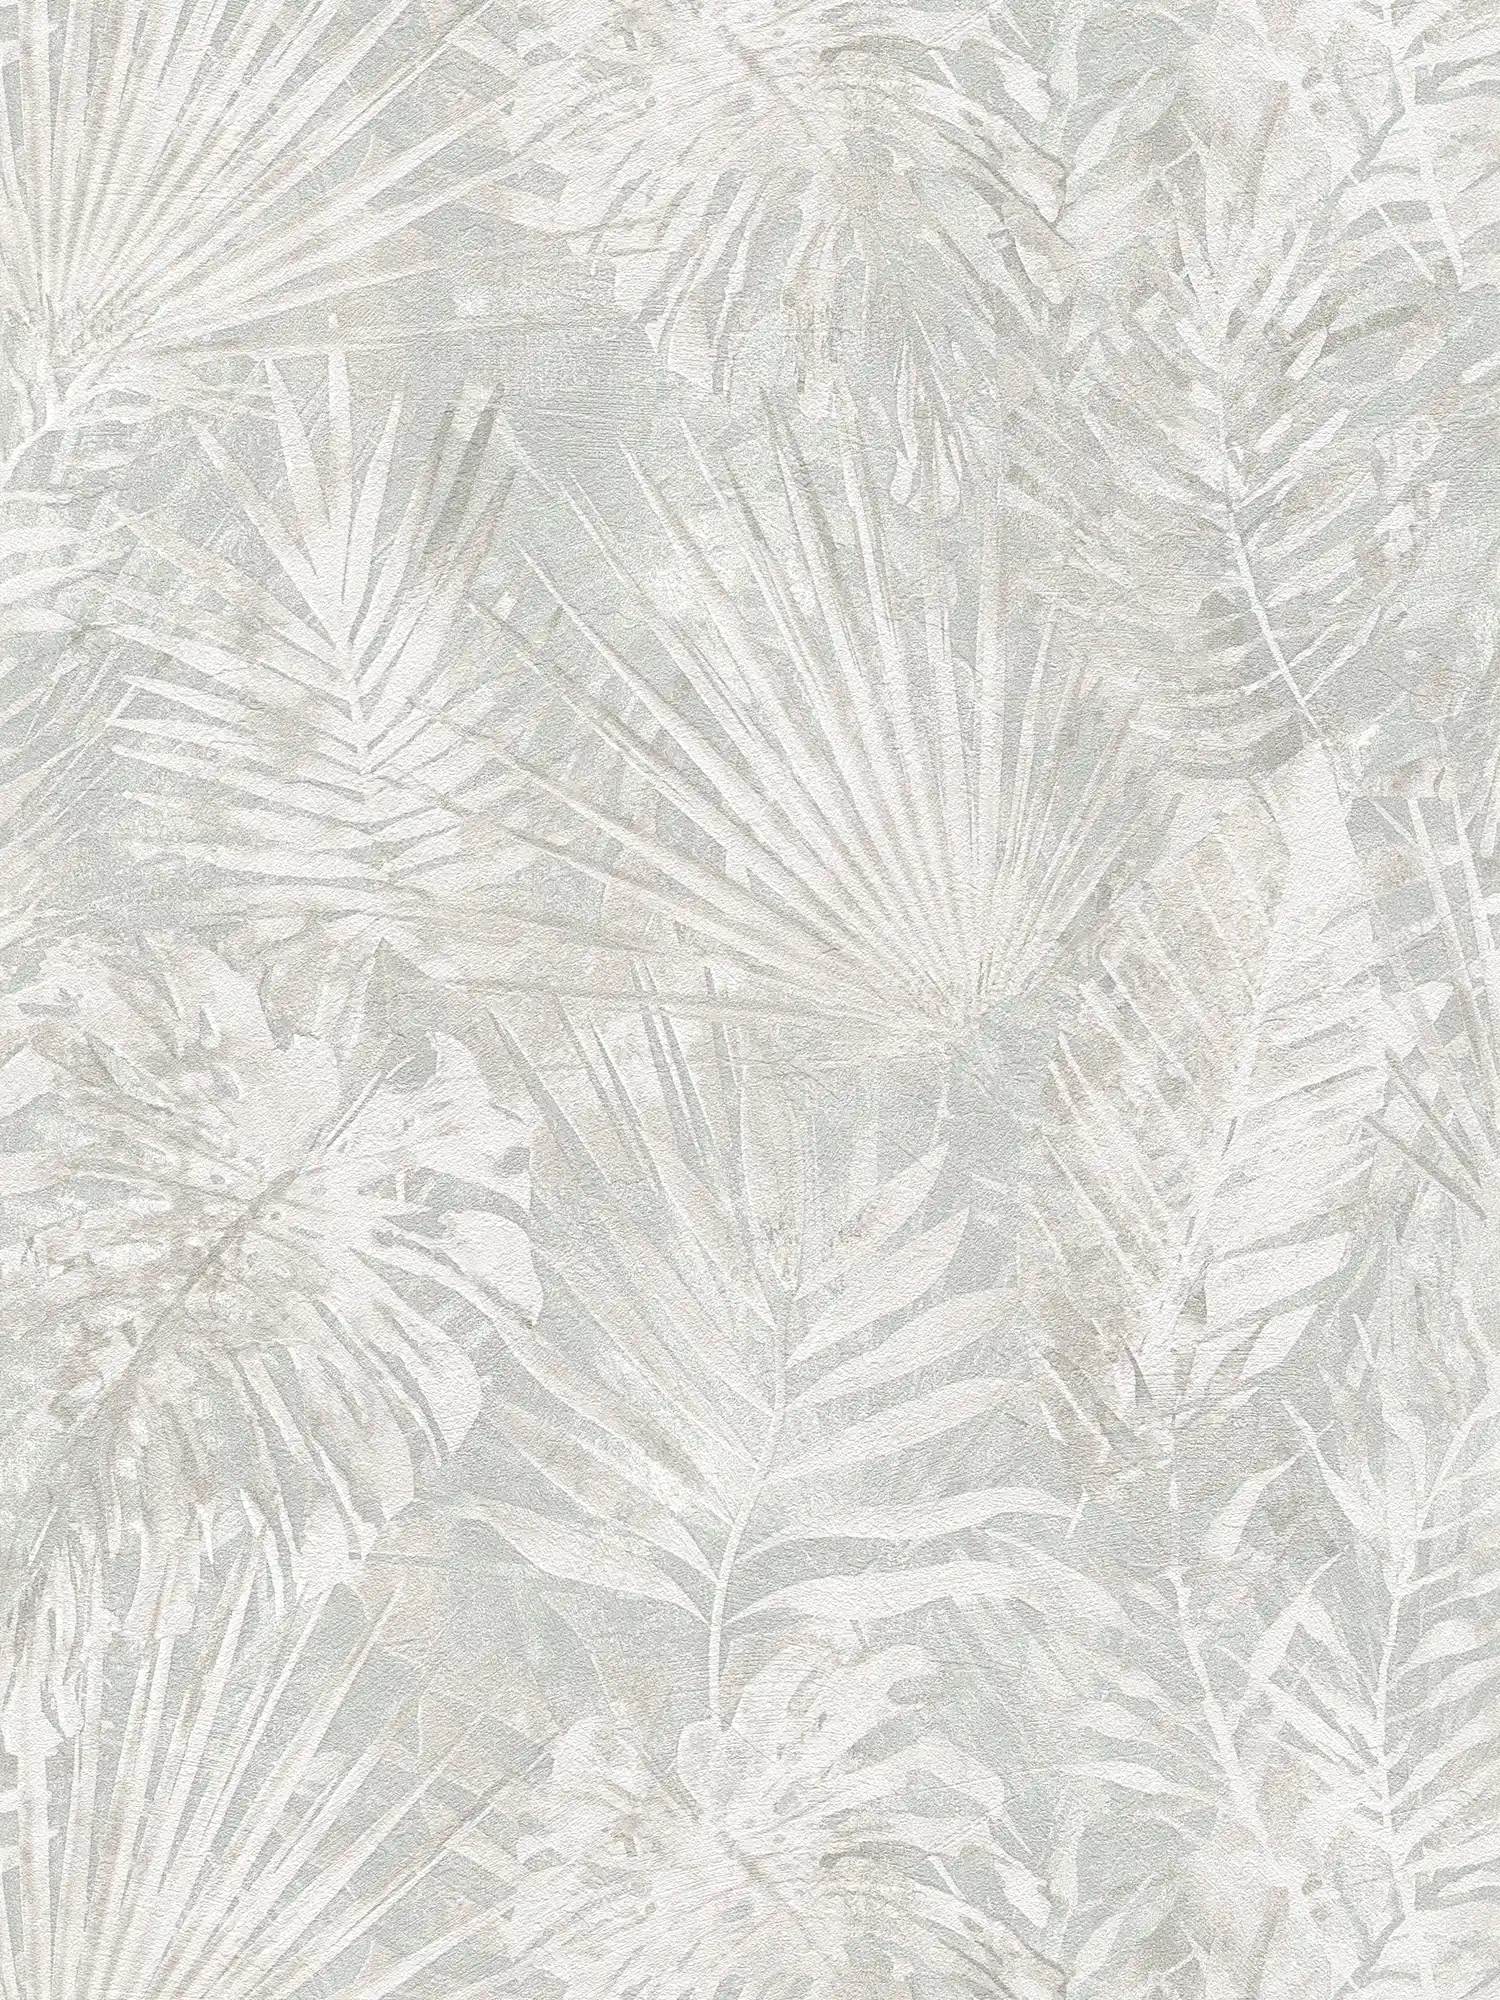 Non-woven wallpaper with leaf motif PVC-free - grey, beige, white
